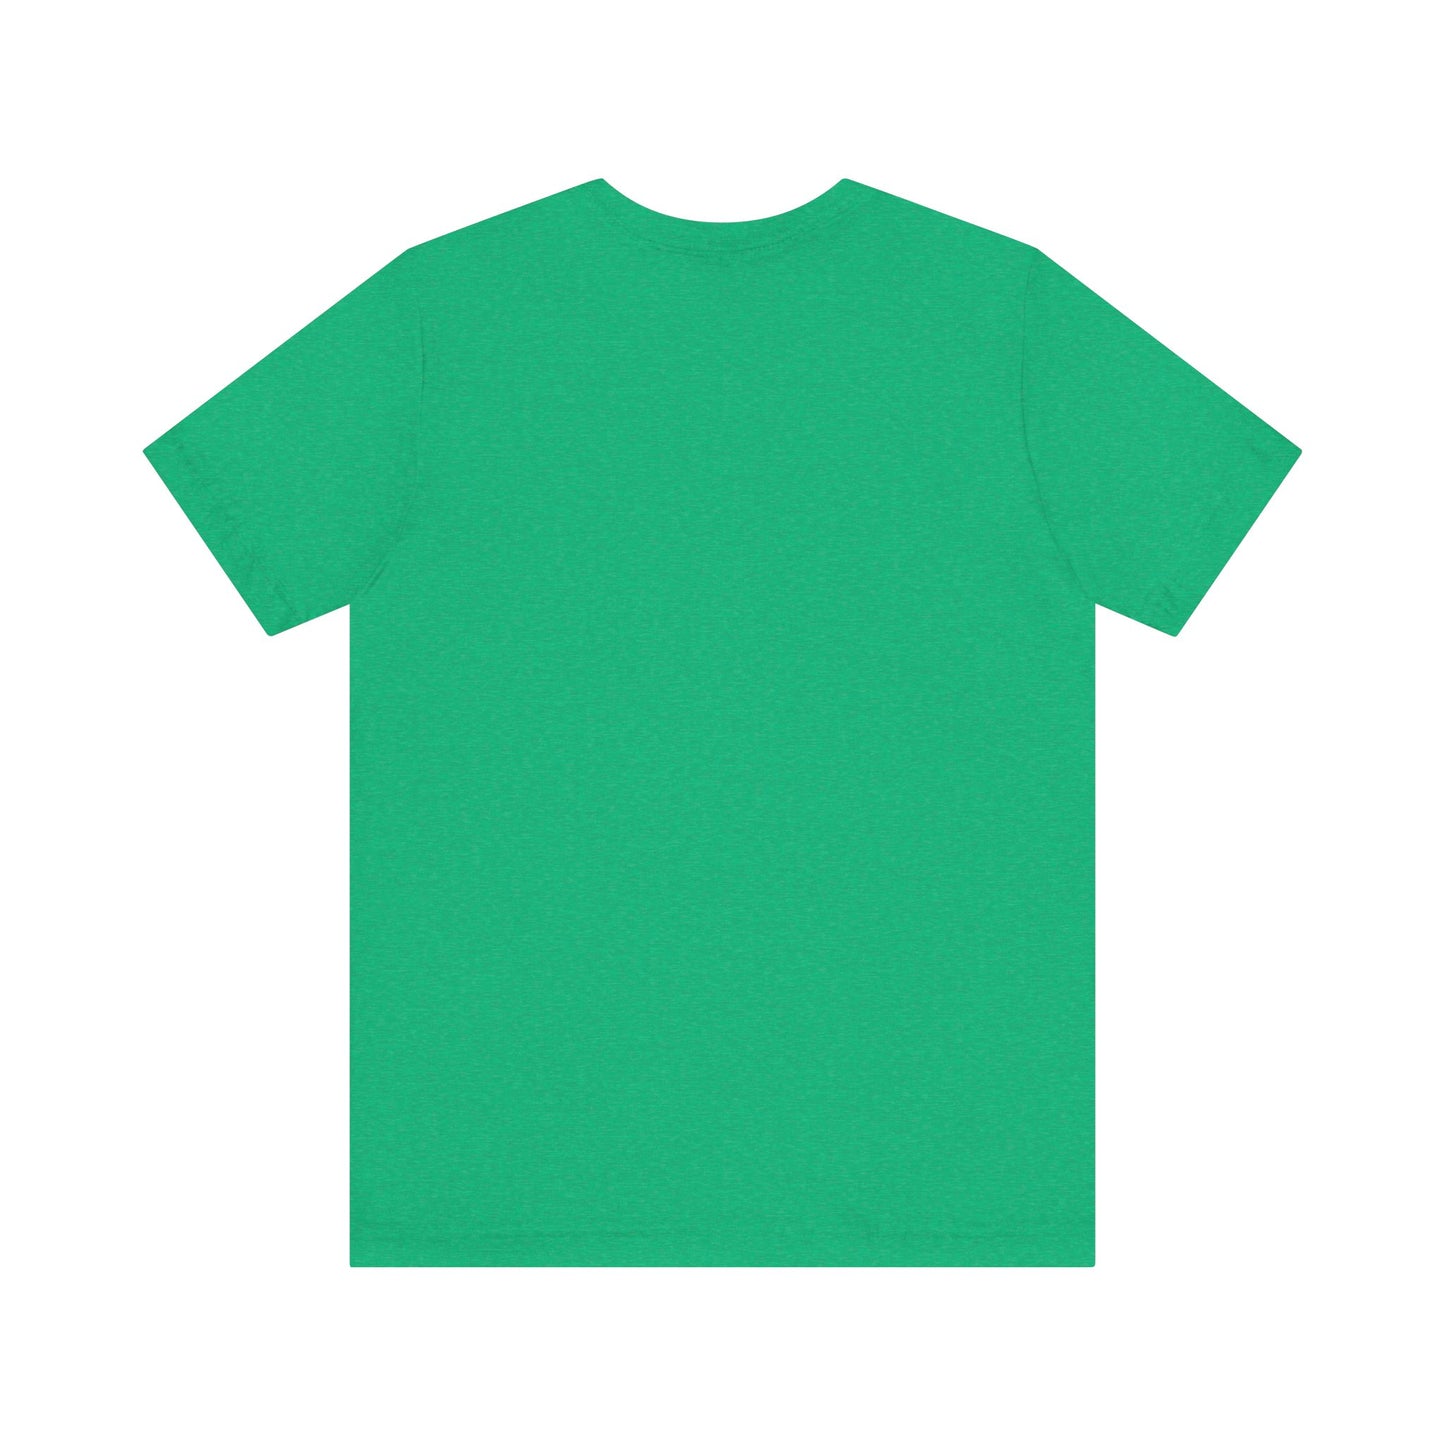 Mile High Satire T-Shirt - B&W Square Logo